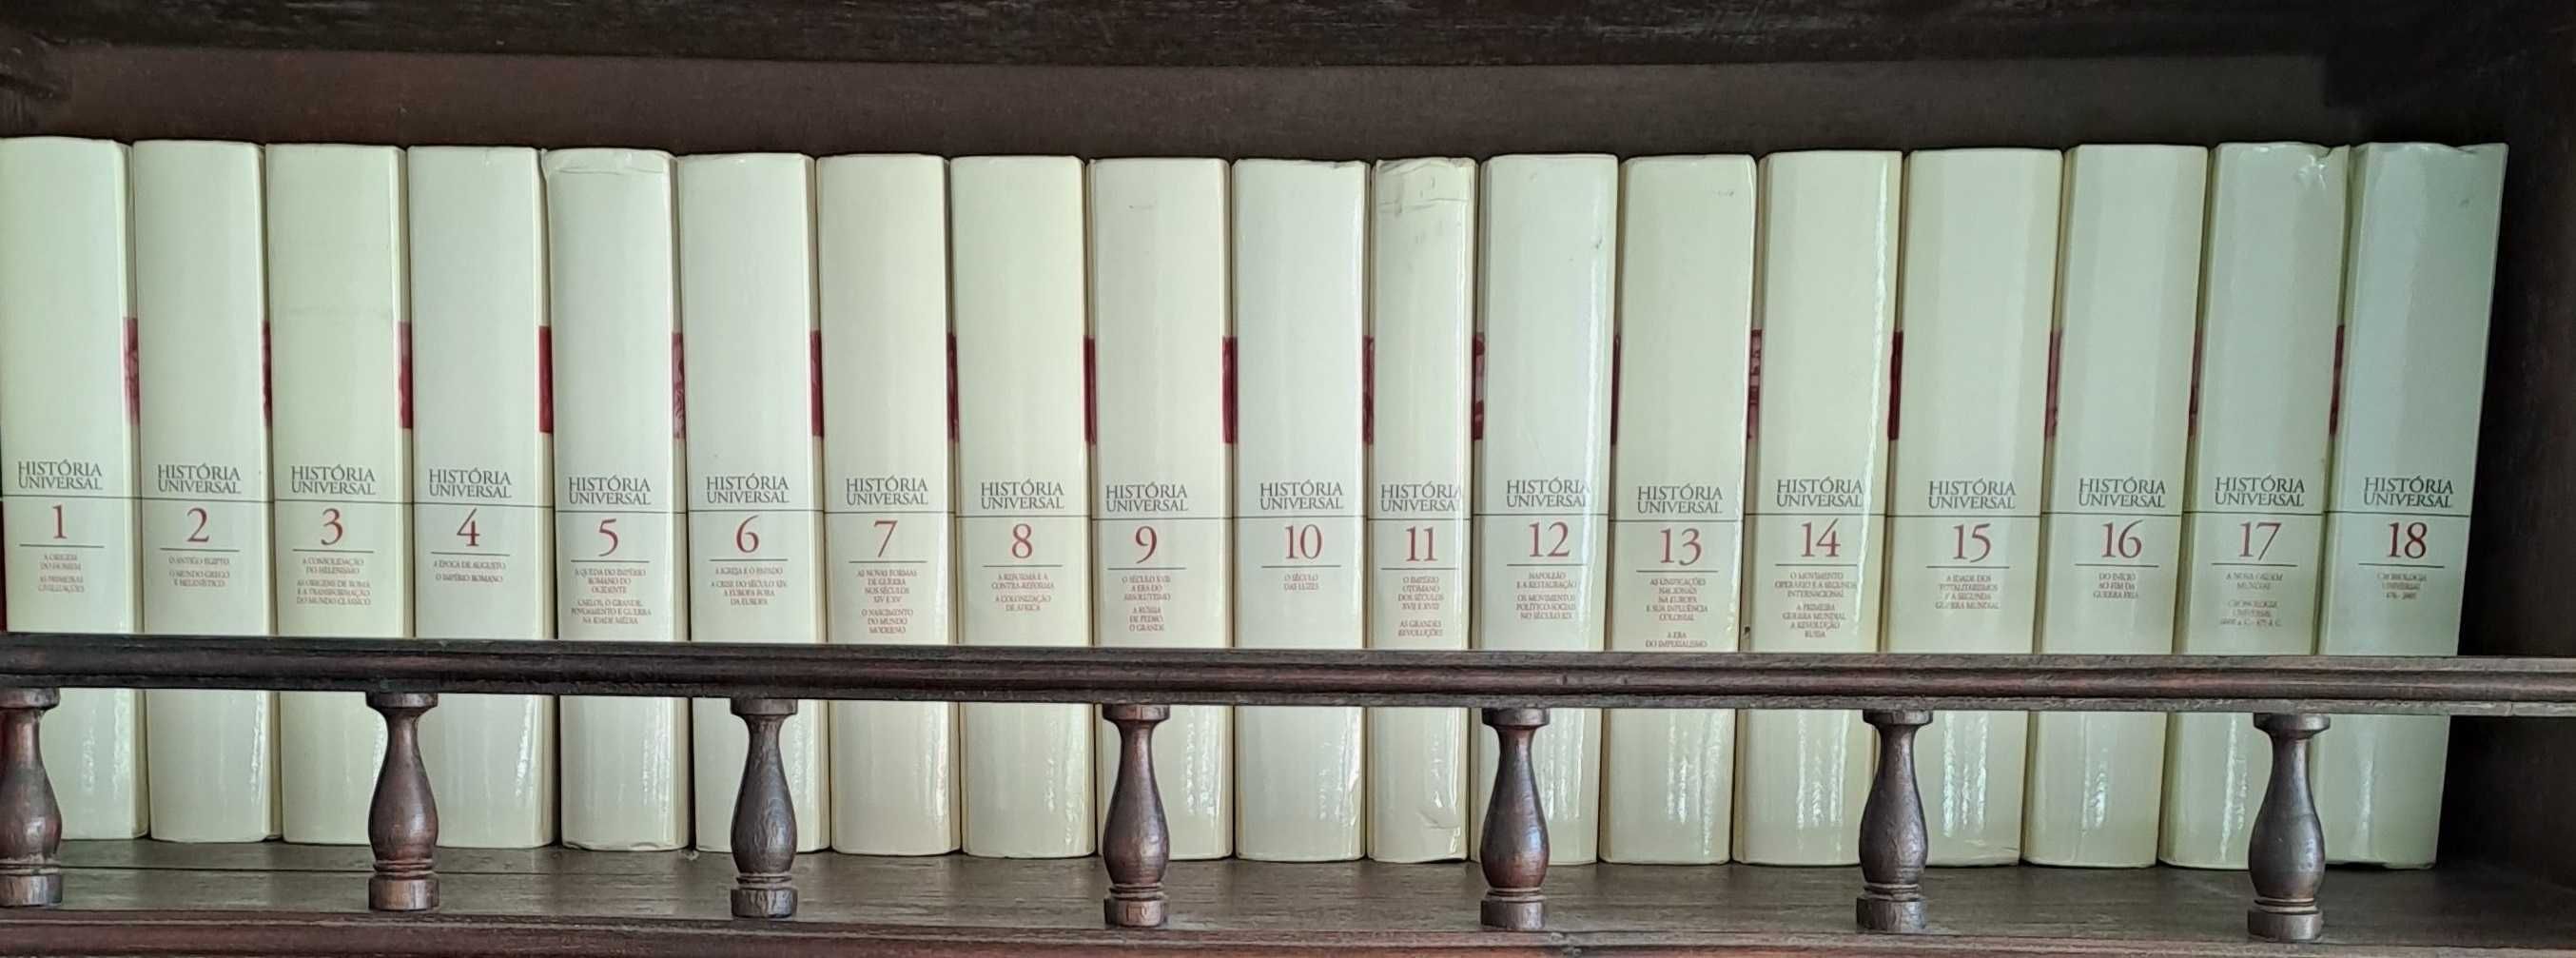 História Universal De Agostini (18 Volumes)